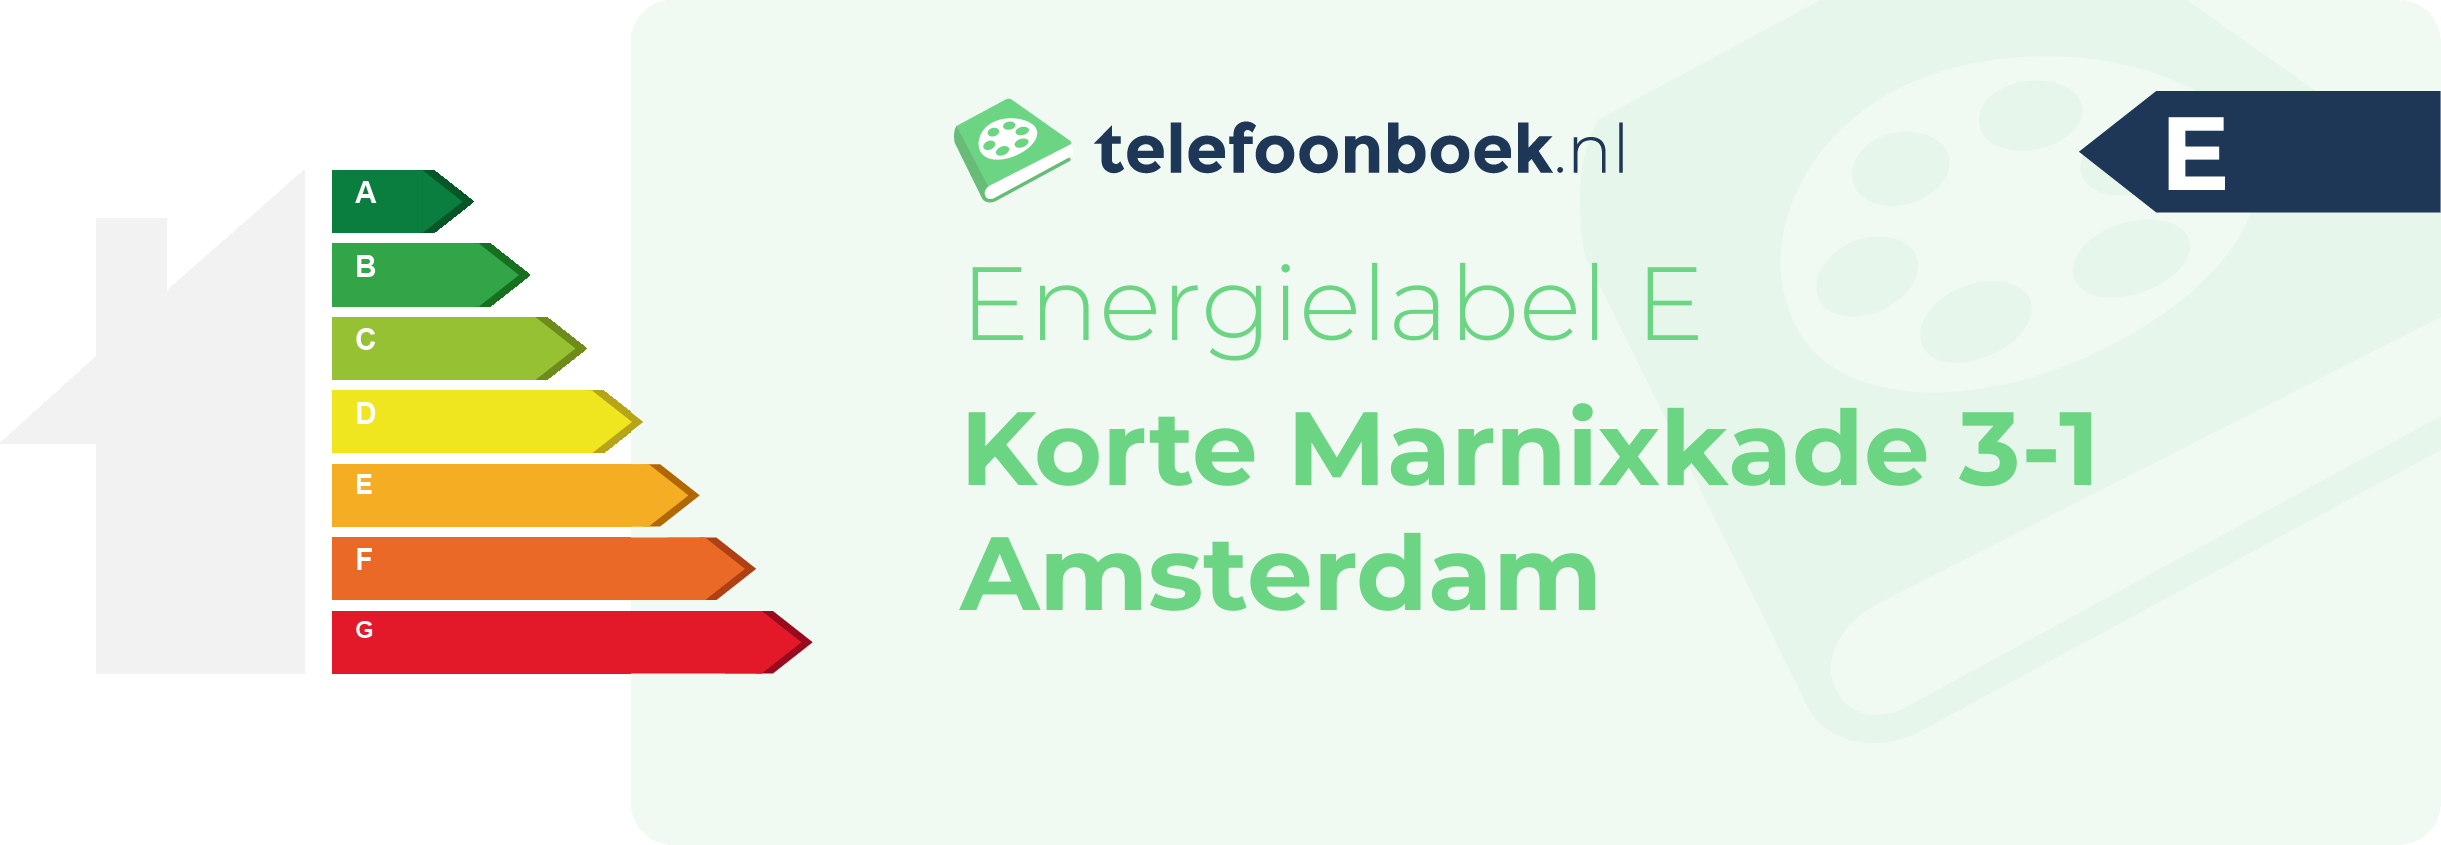 Energielabel Korte Marnixkade 3-1 Amsterdam